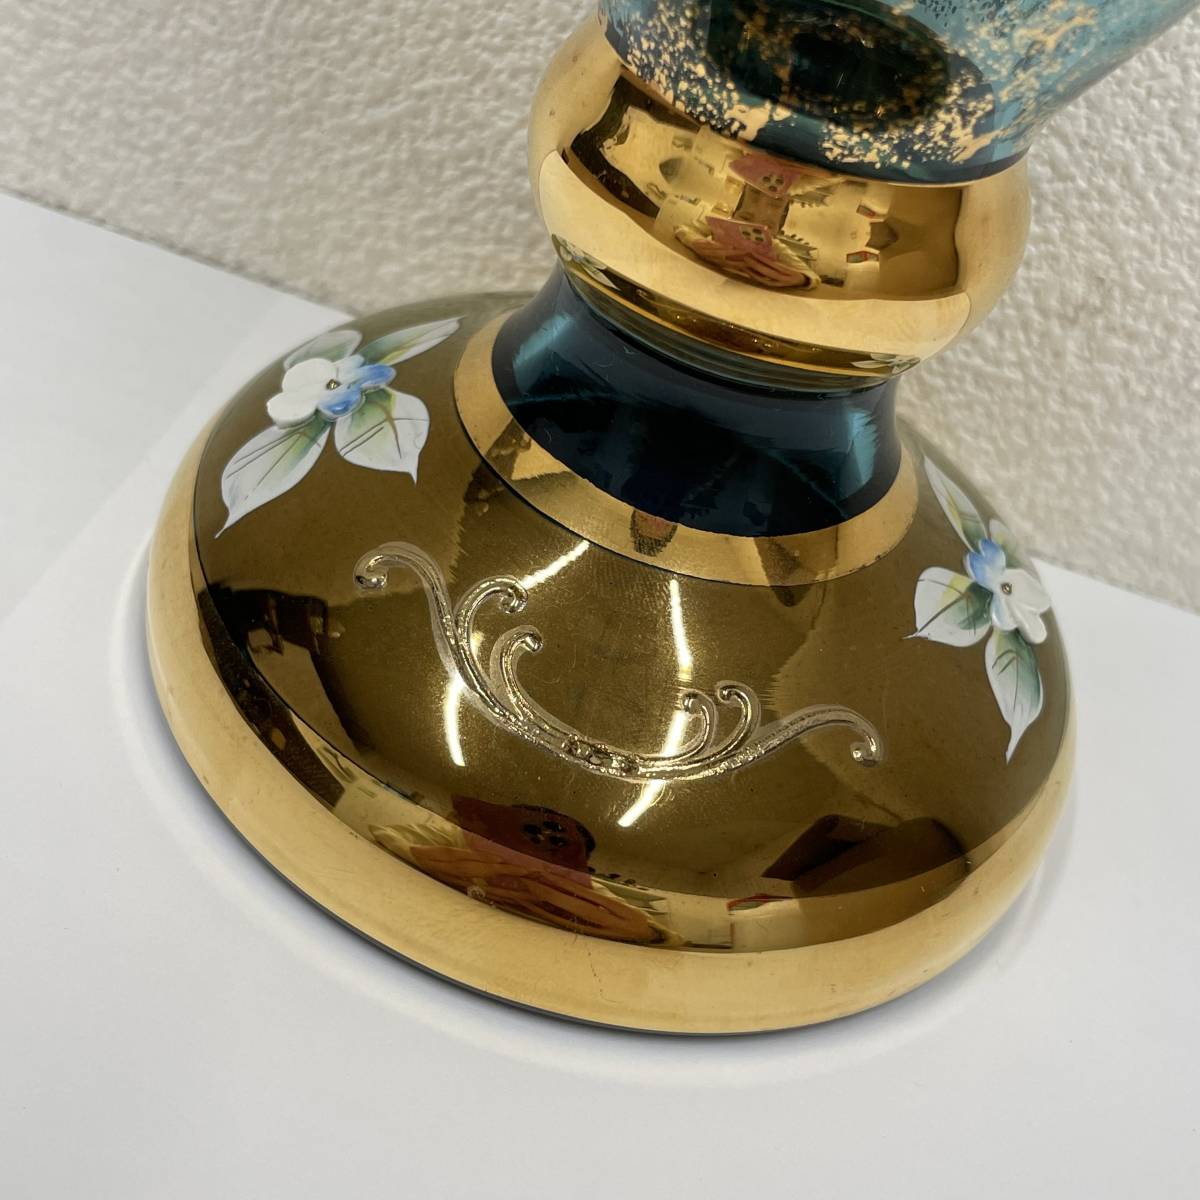 [BOHEMIA/bohe mia ] ваза цветок основа цветок голубой × Gold цвет высота примерно 36cm[ с ящиком ]*10321